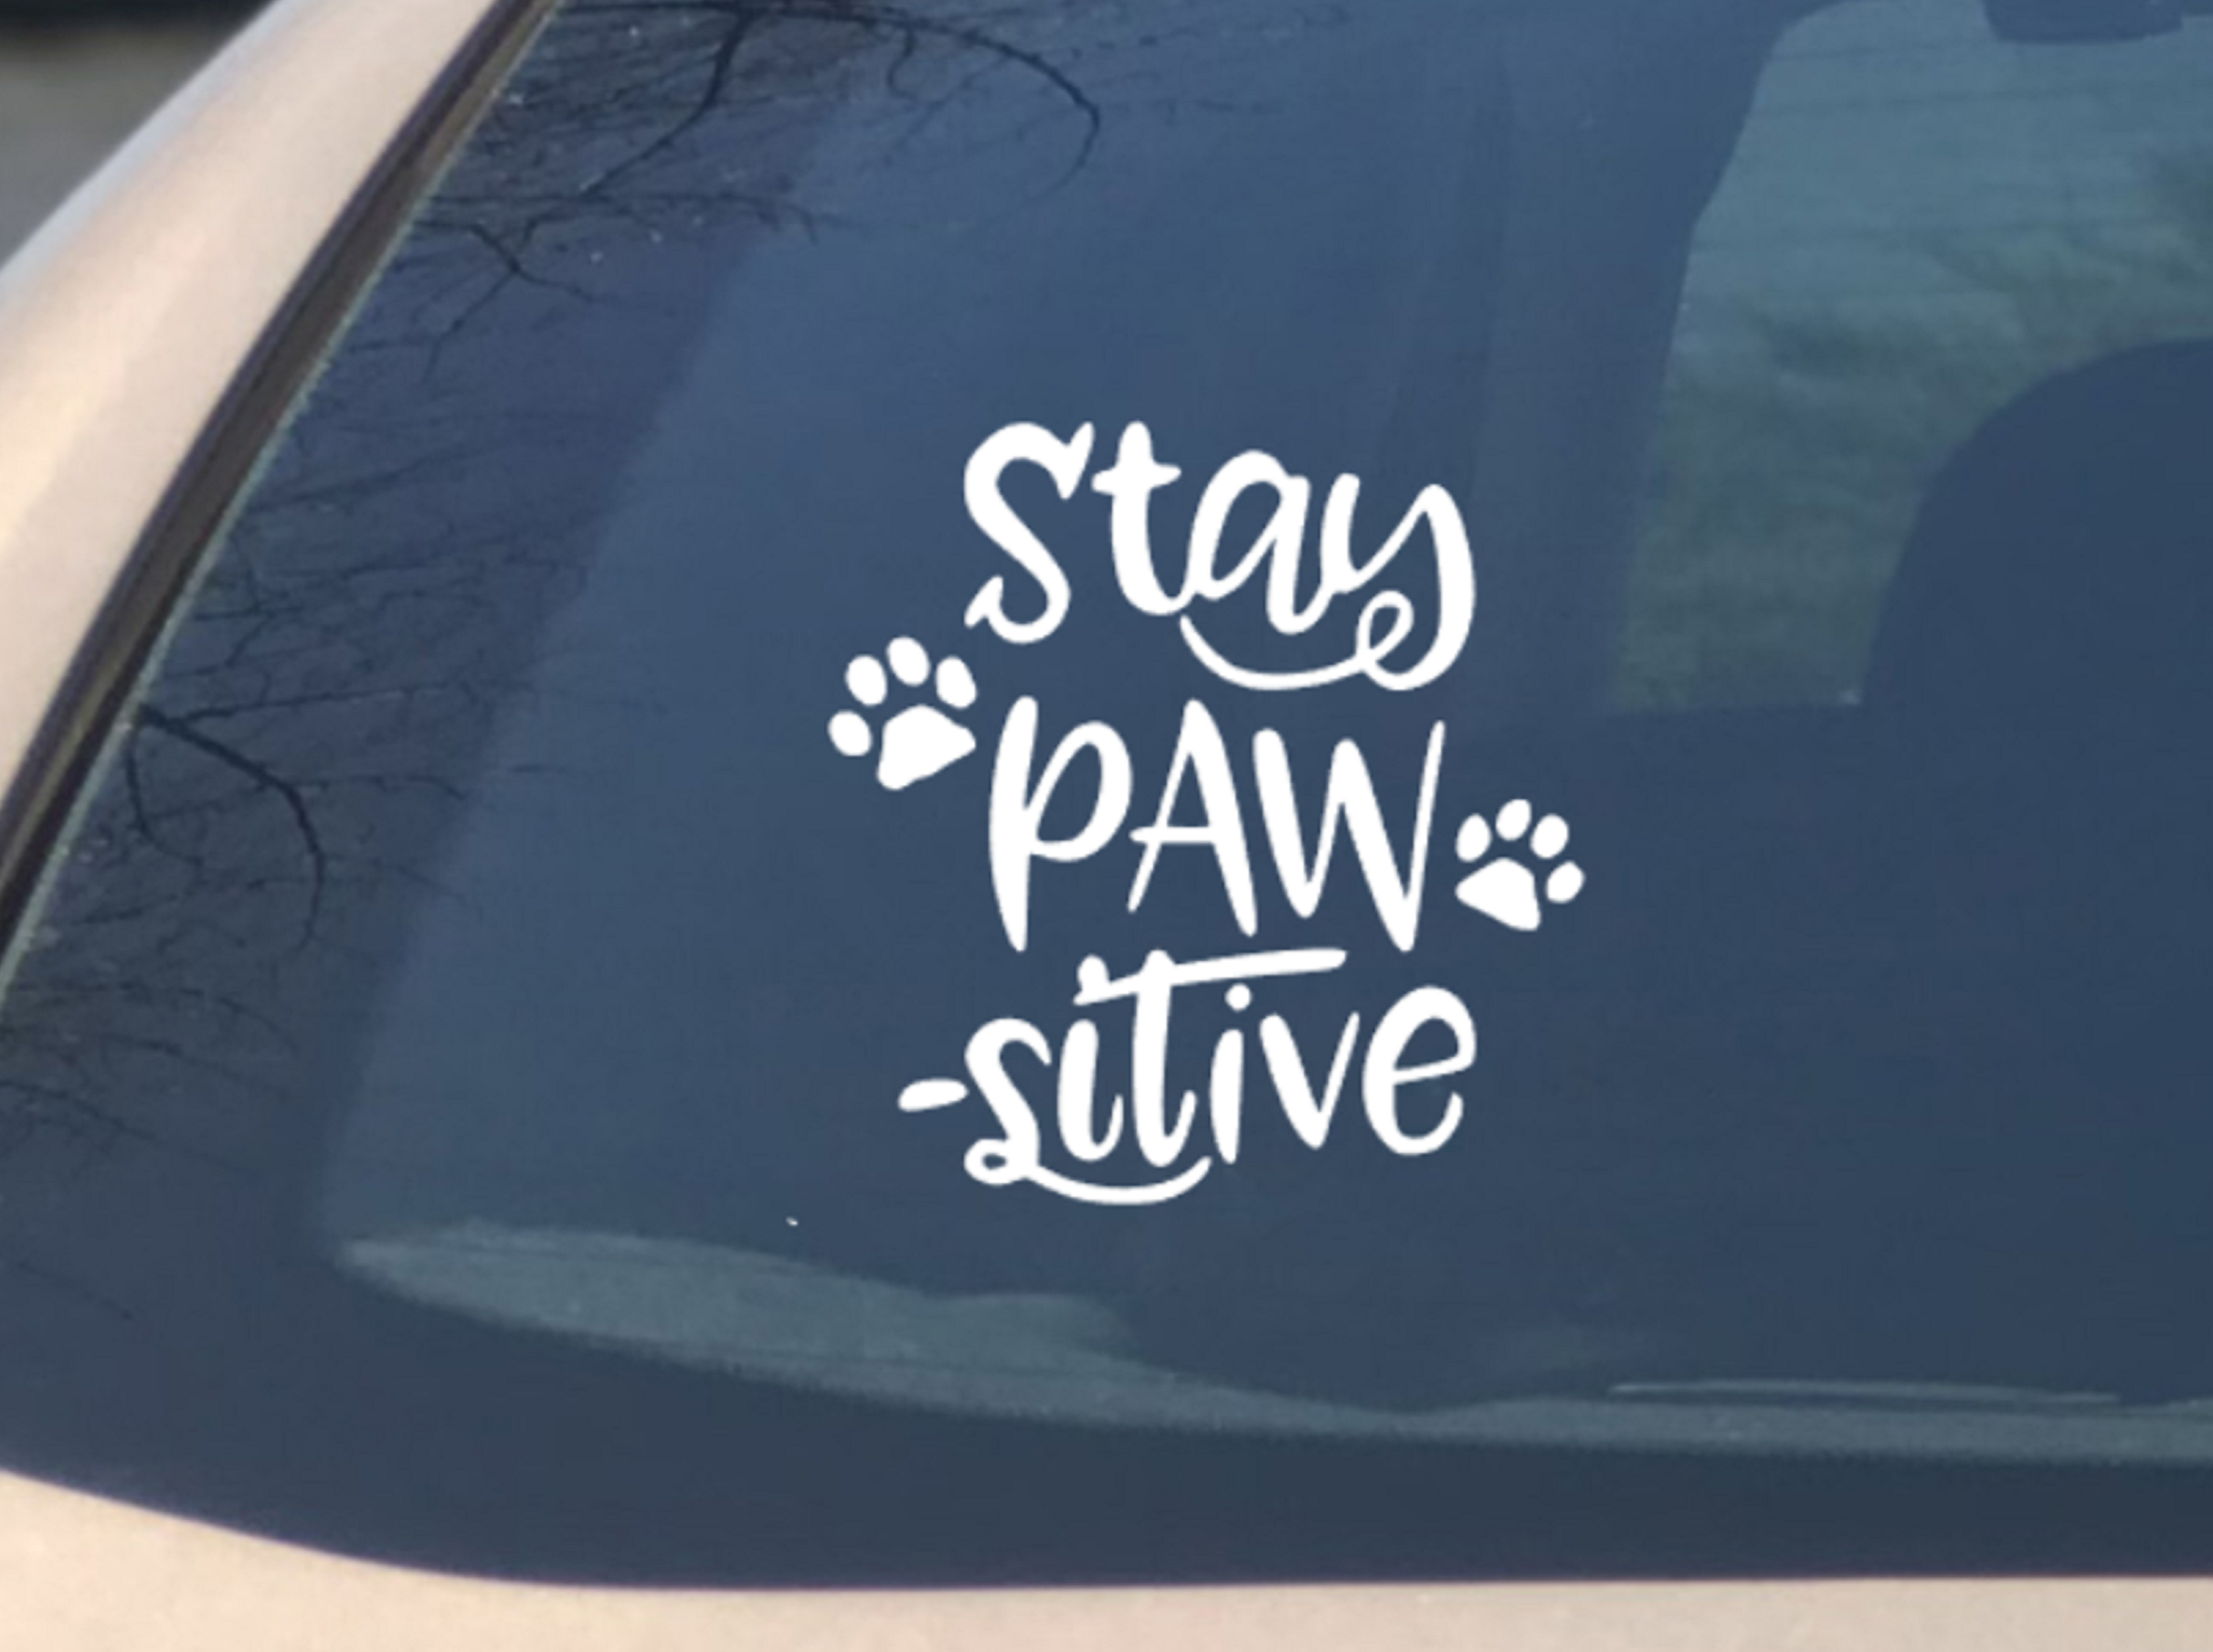 Stay Paw-sitive Dog Car Decal Sticker, Positive Motivational Dog Sticker, Vinyl Window Cute,  Dog lover gift, Best gift dog friend - My Crafty Dog